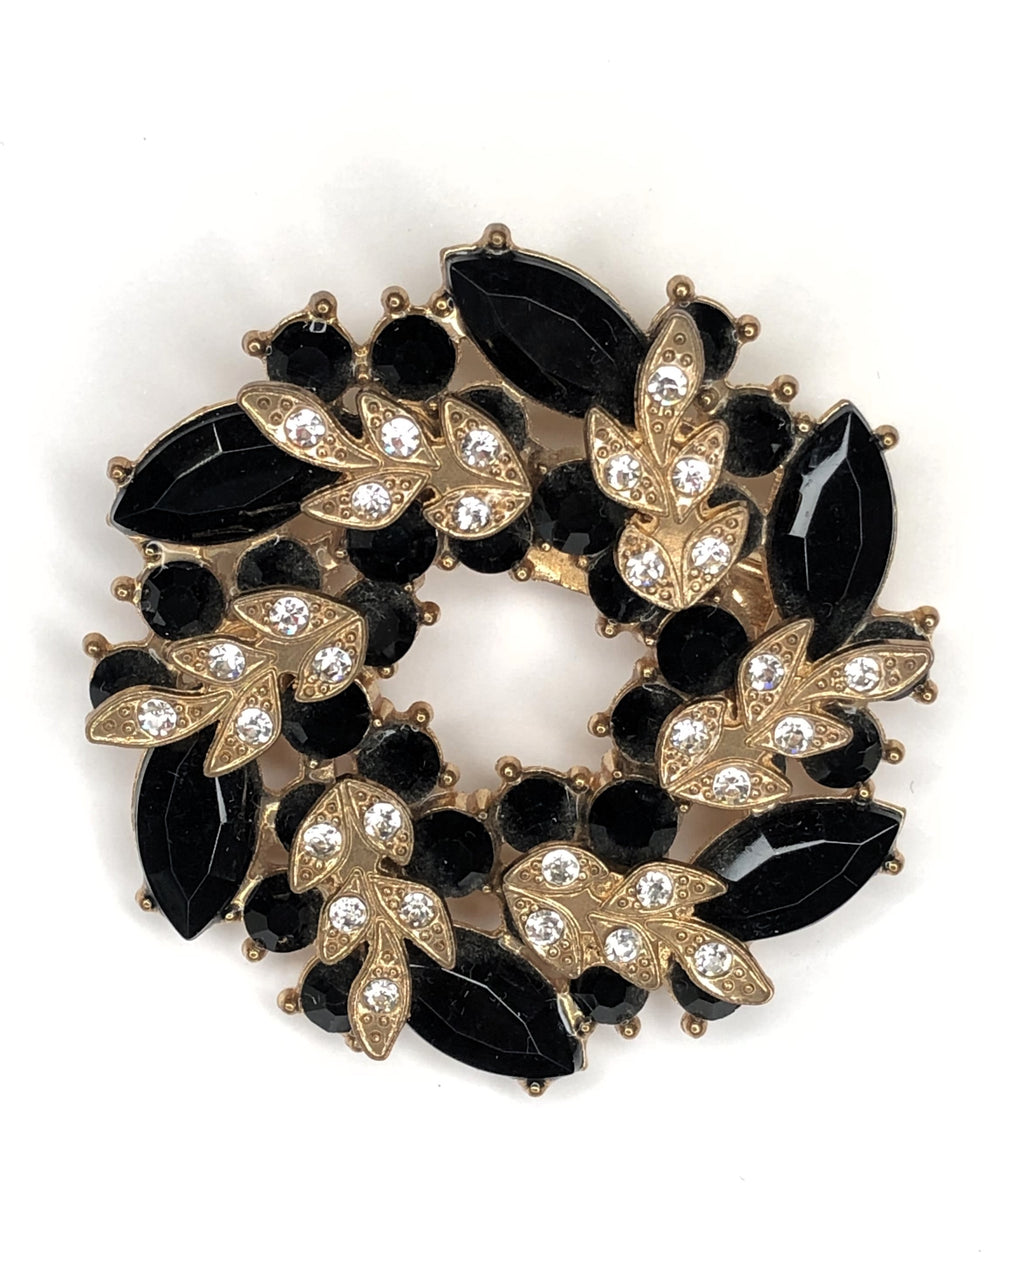 Black & gold crystal wreath brooch at erika